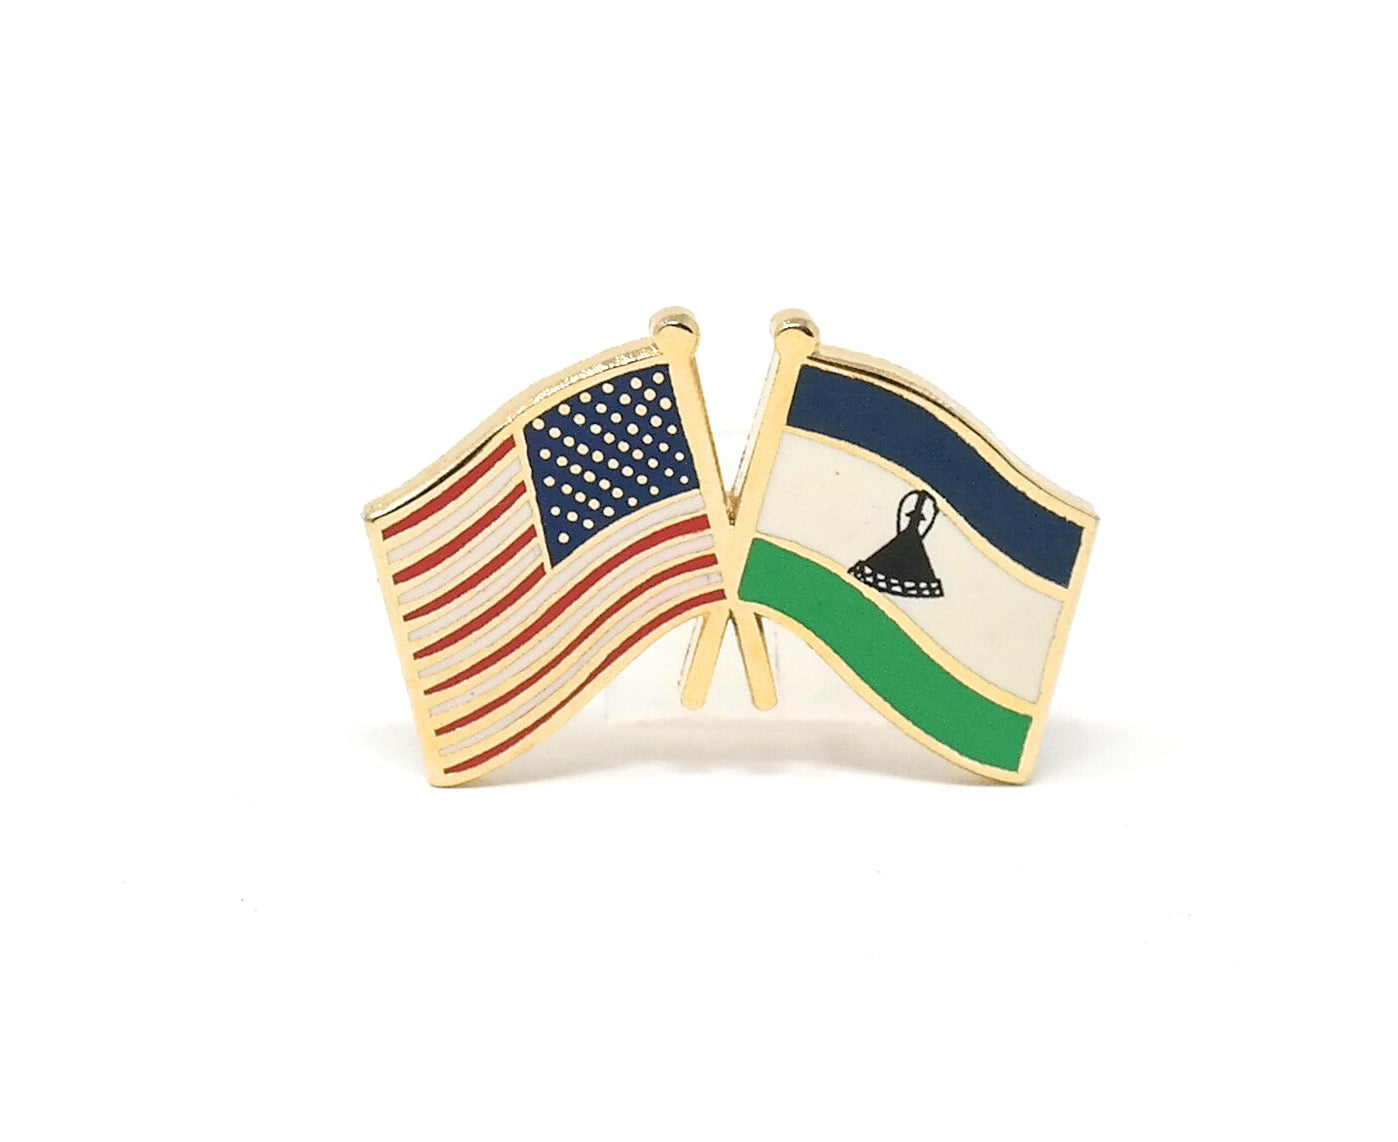 Lesotho & USA Friendship Flags Lapel Pin